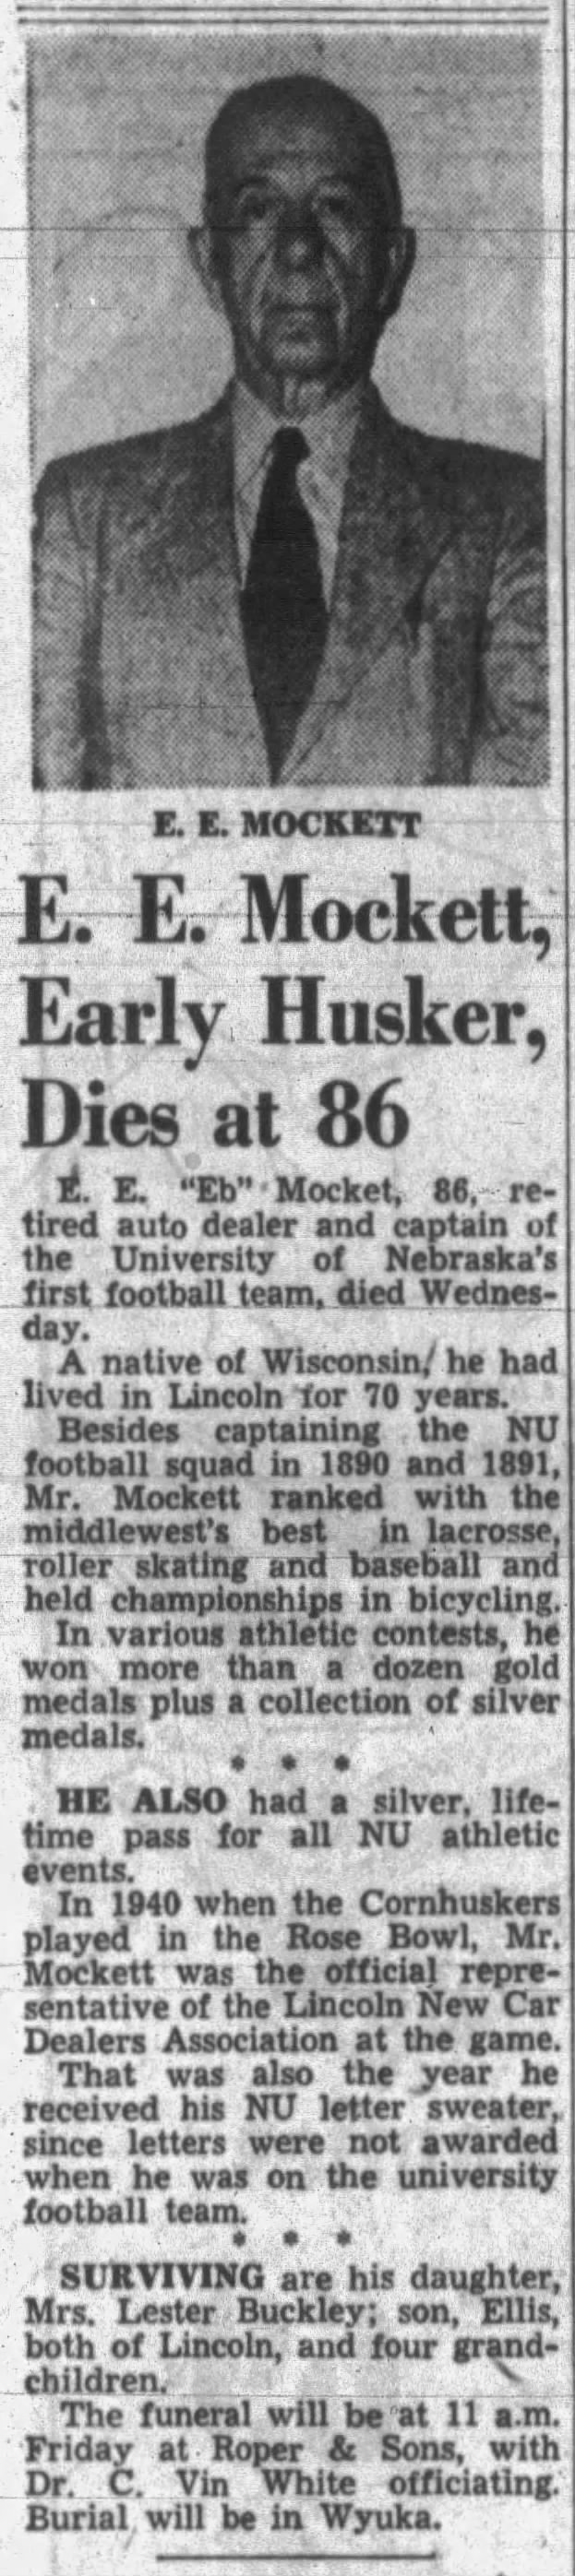 1954, E.E. Mockett dies at age 86